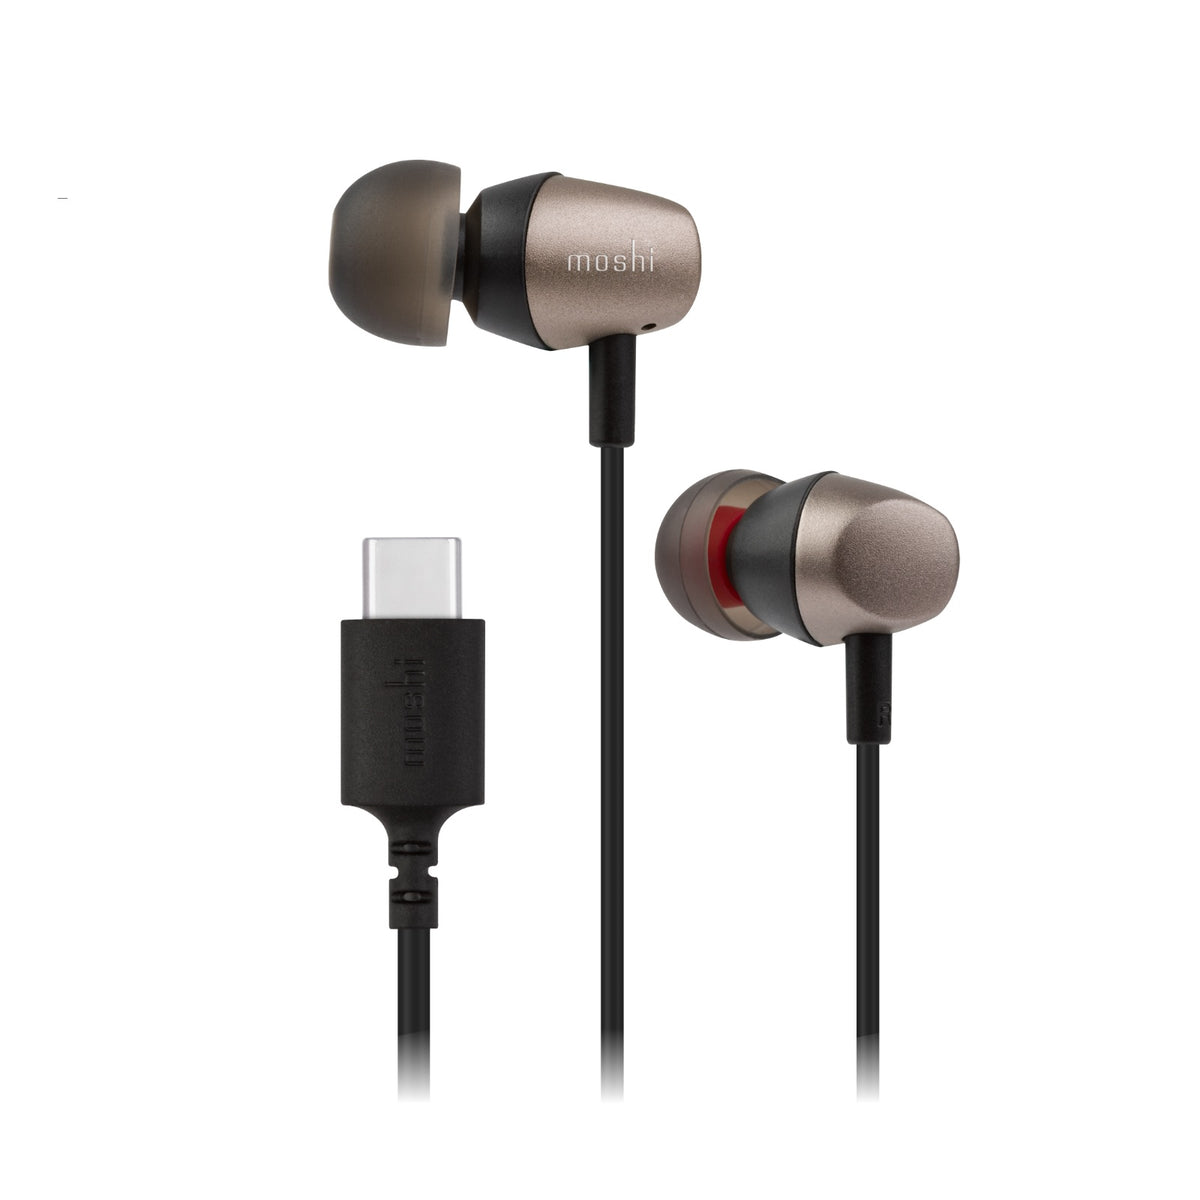 MOSHI Mythro C USB Type-C Earbuds with Mic - Gunmetal Grey